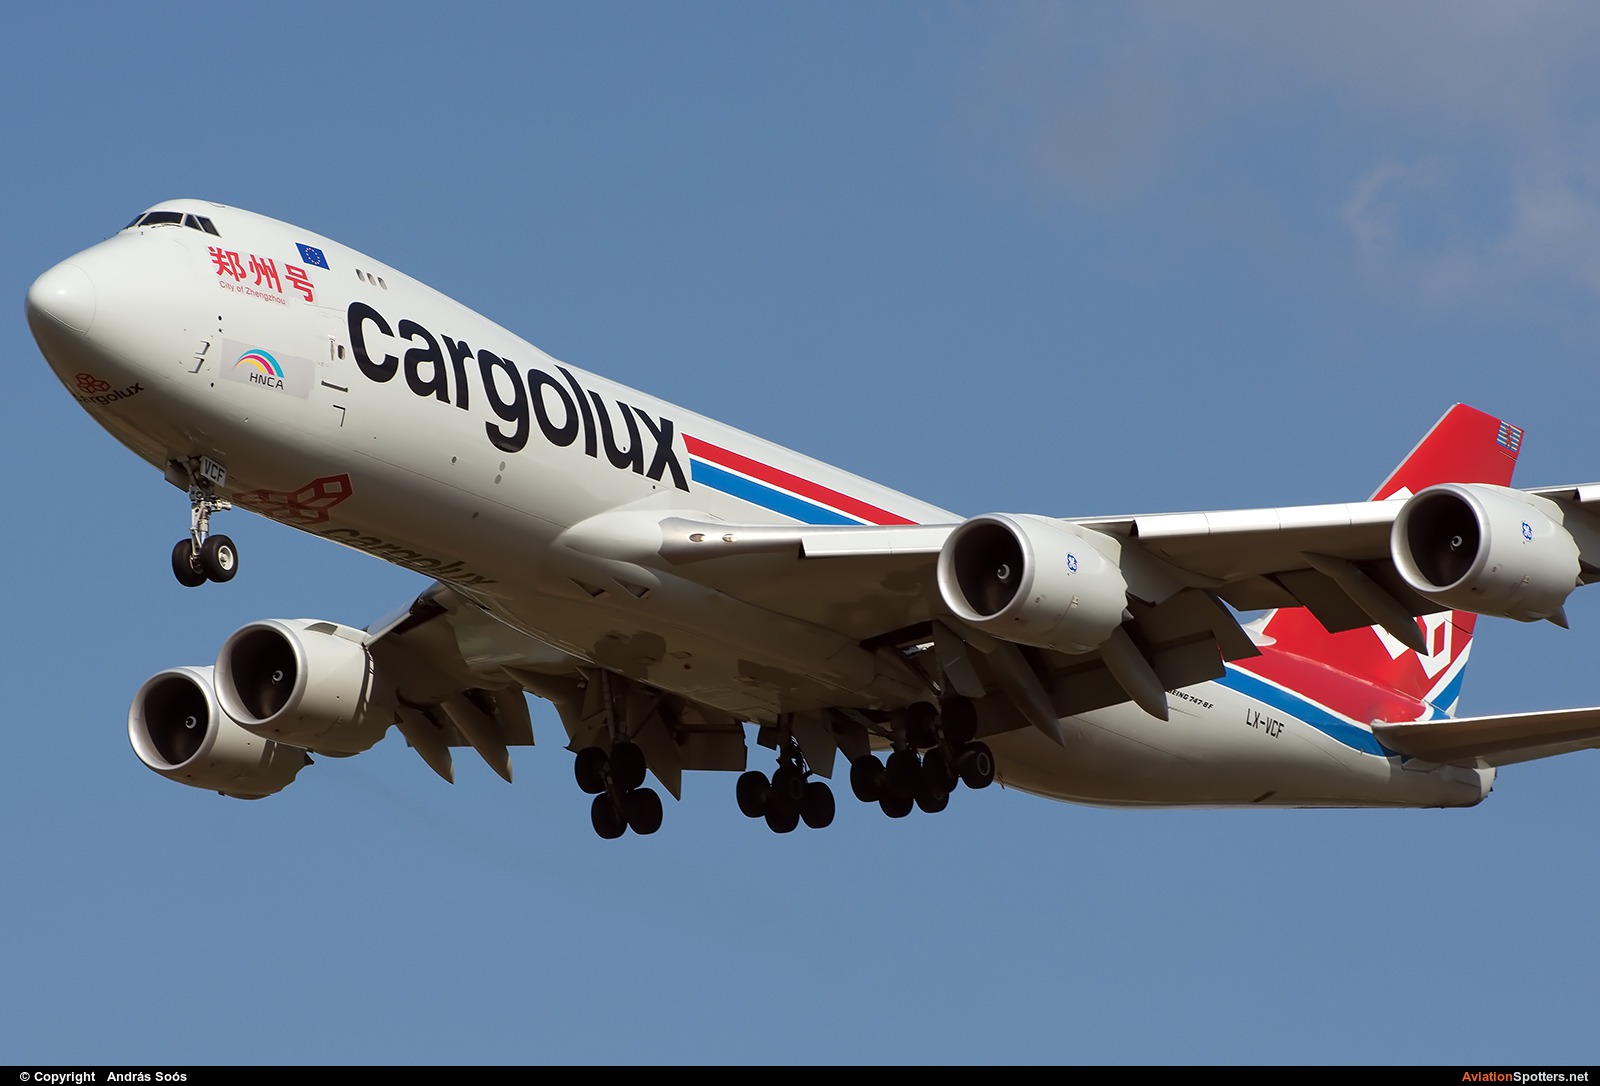 Cargolux  -  747-8R7F  (LX-VCF) By András Soós (sas1965)